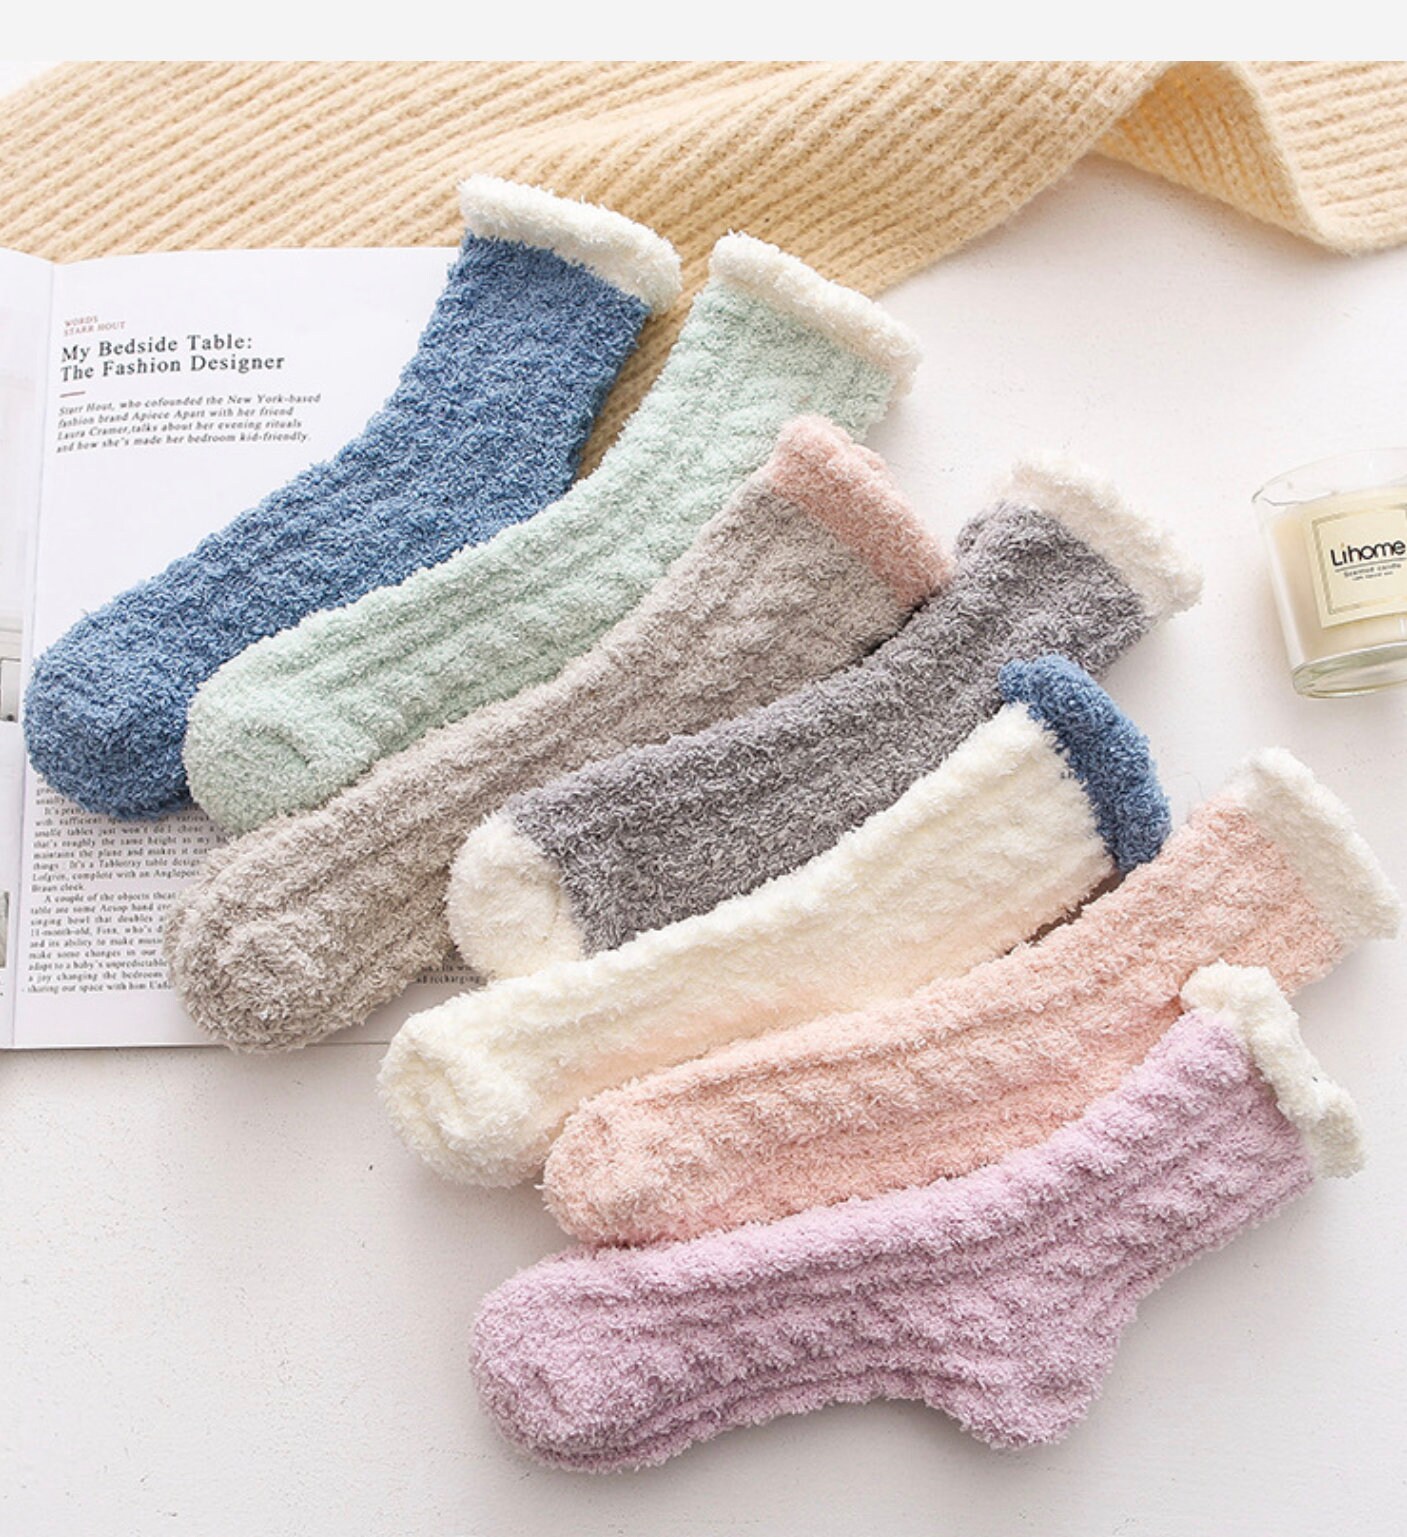 Value Pack Womens Super Soft Warm Microfiber Fuzzy Cozy Animal Socks or Christmas Winter Animal Socks 